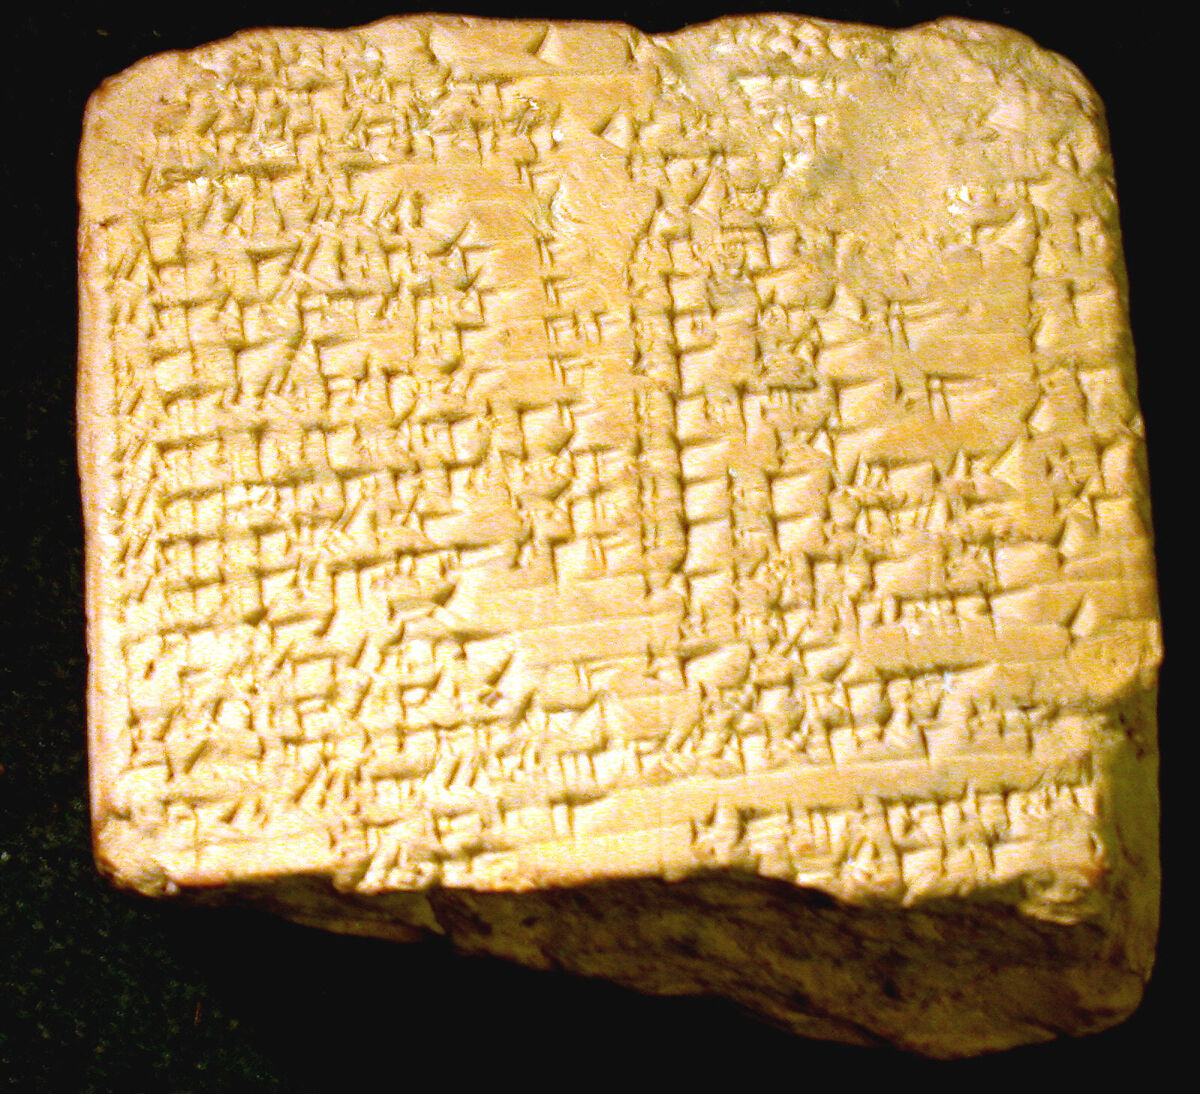 Cuneiform tablet: Utu-gin e-ta, balag composition addressed to Enlil, Clay, Seleucid